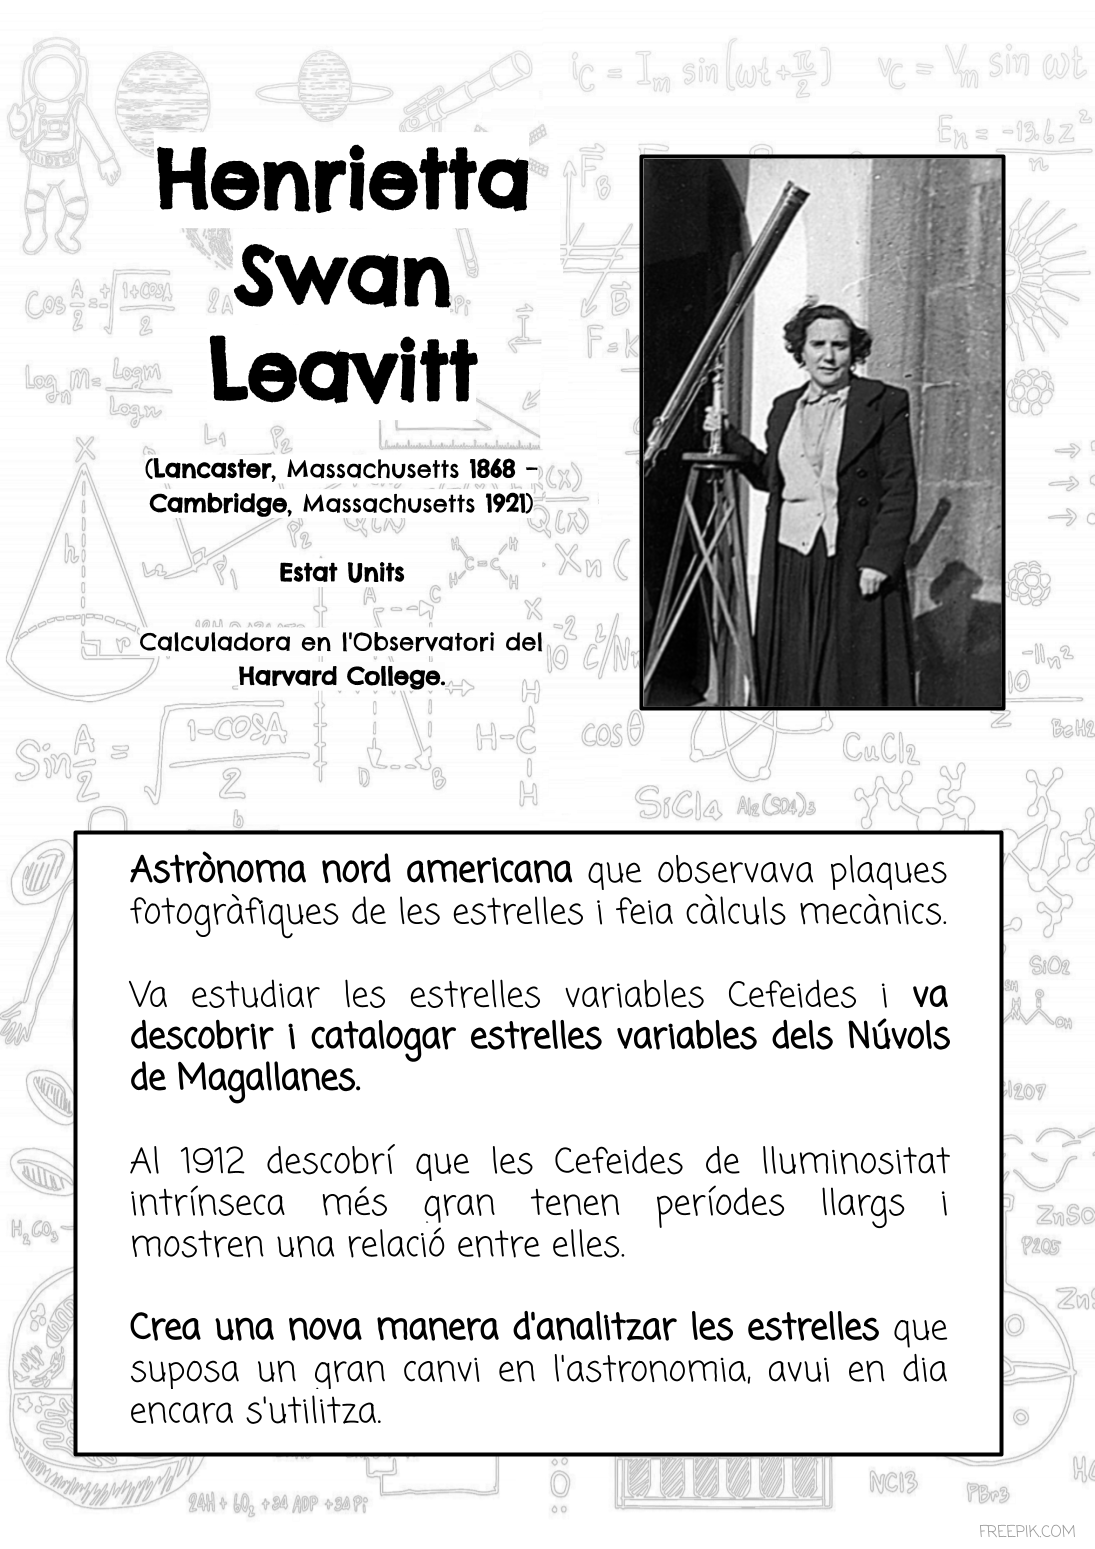 Henrietta Swab Leavitt